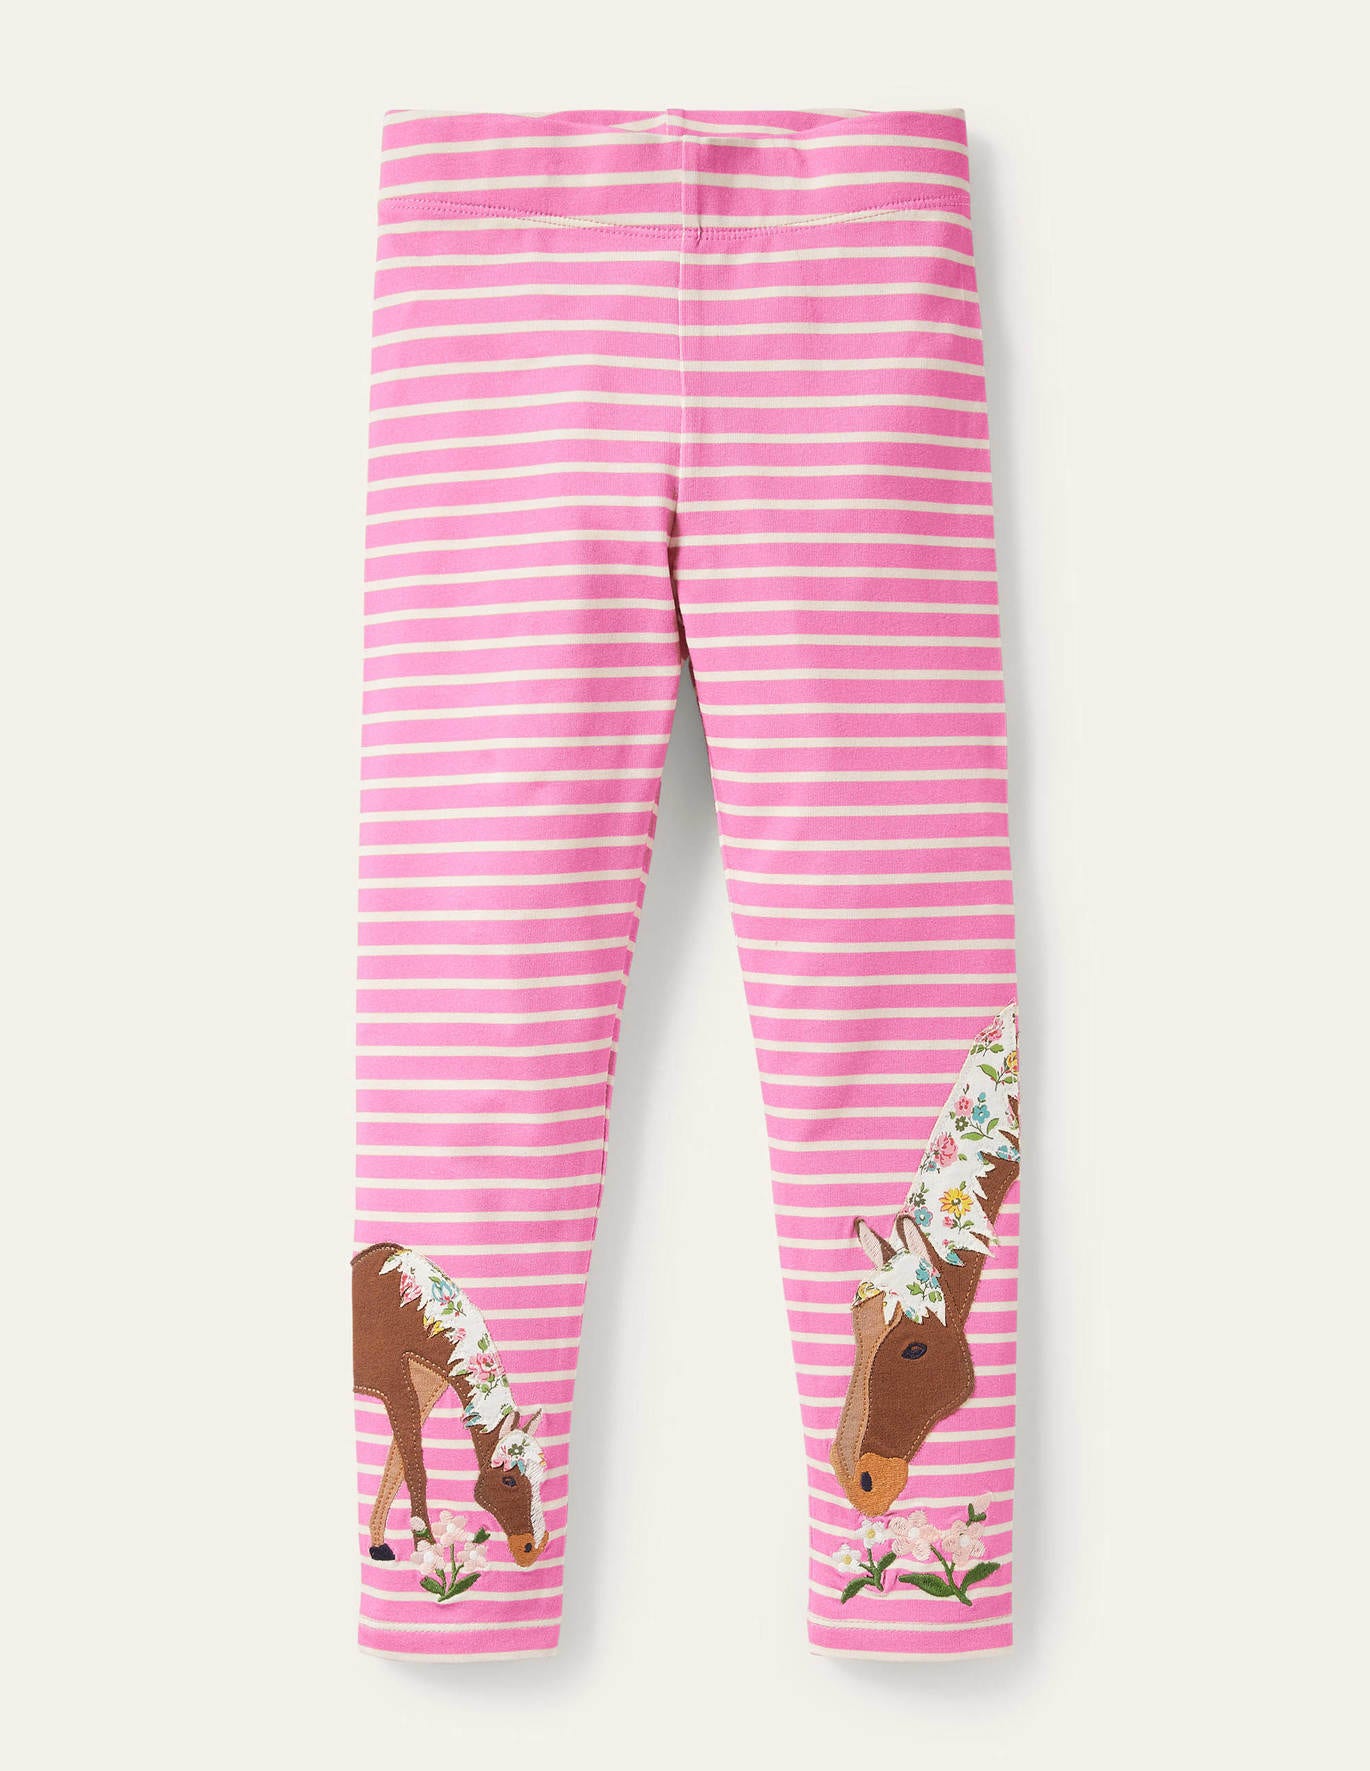 Boden Fun Applique Leggings - Bright Petal Pink/Ivory Horses